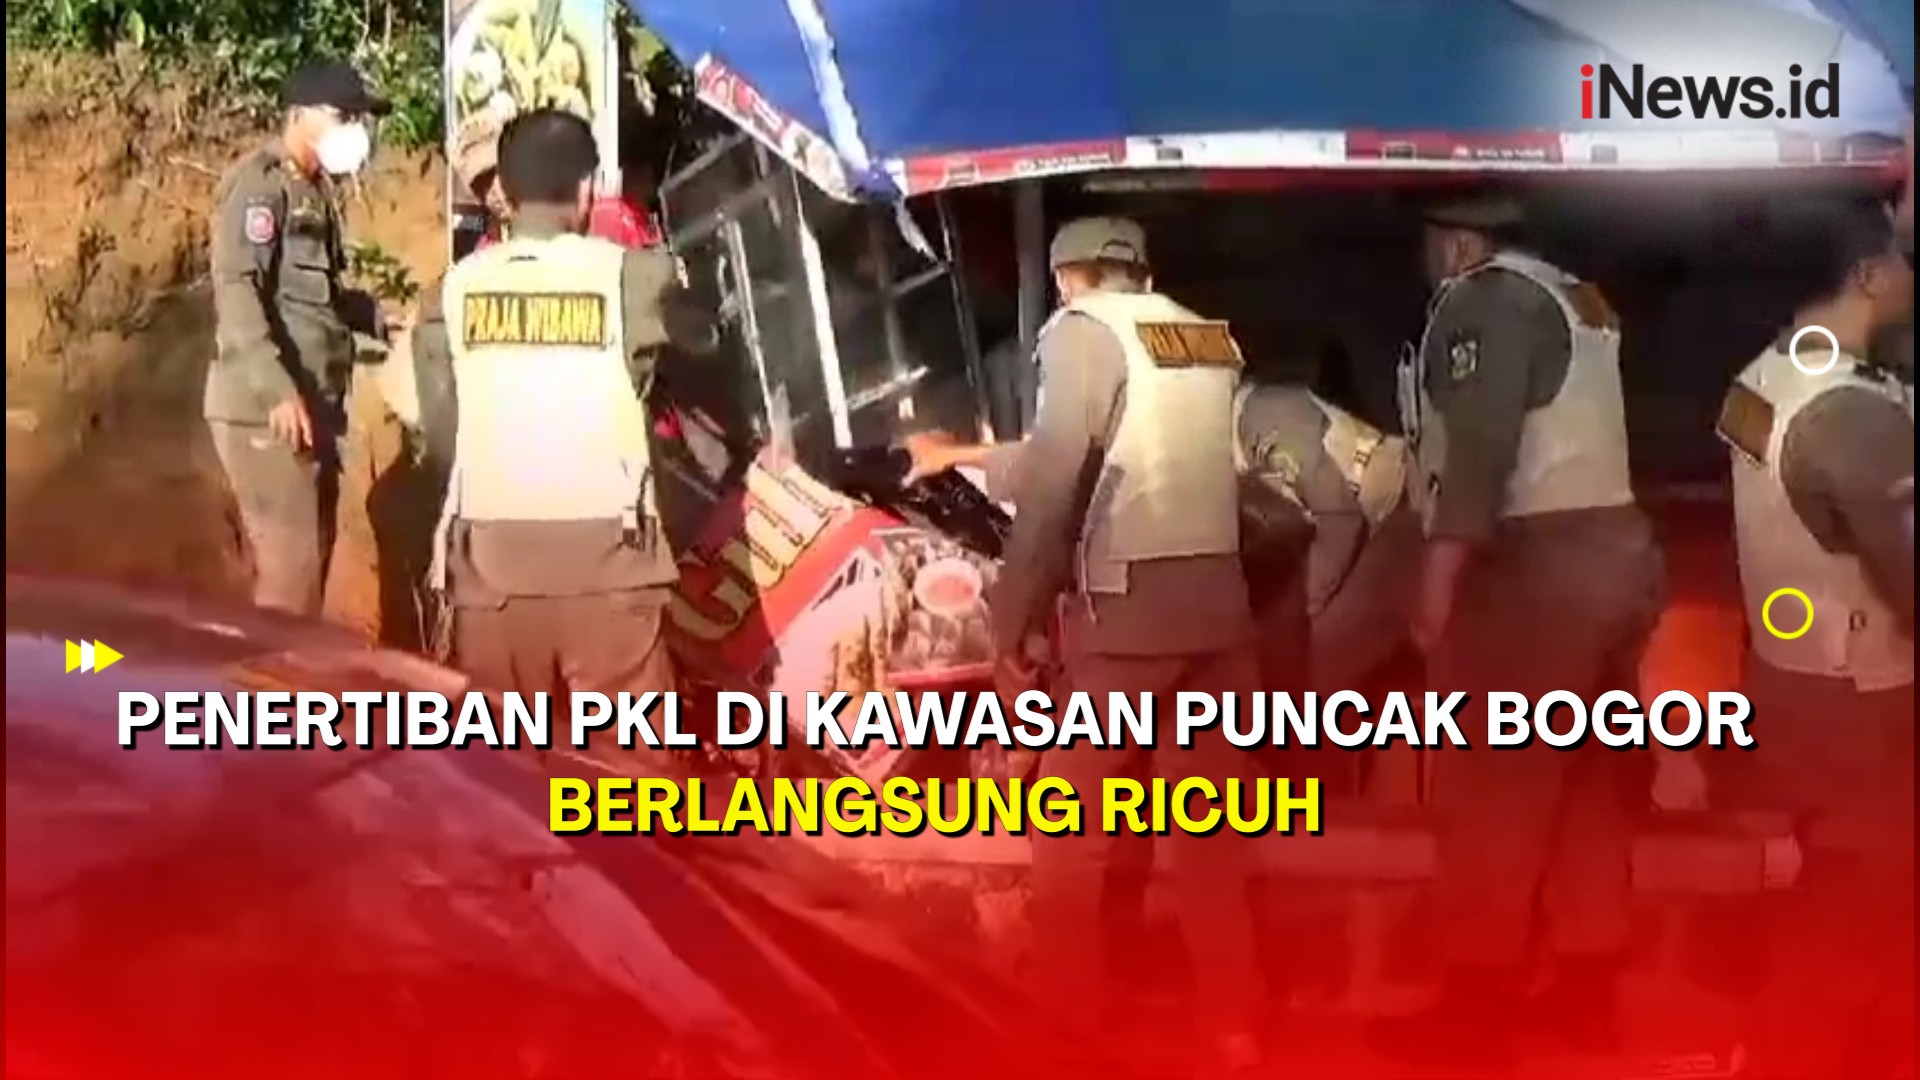 Penertiban PKL di Kawasan Puncak Bogor Berlangsung Ricuh, Pedagang Menolak Digusur